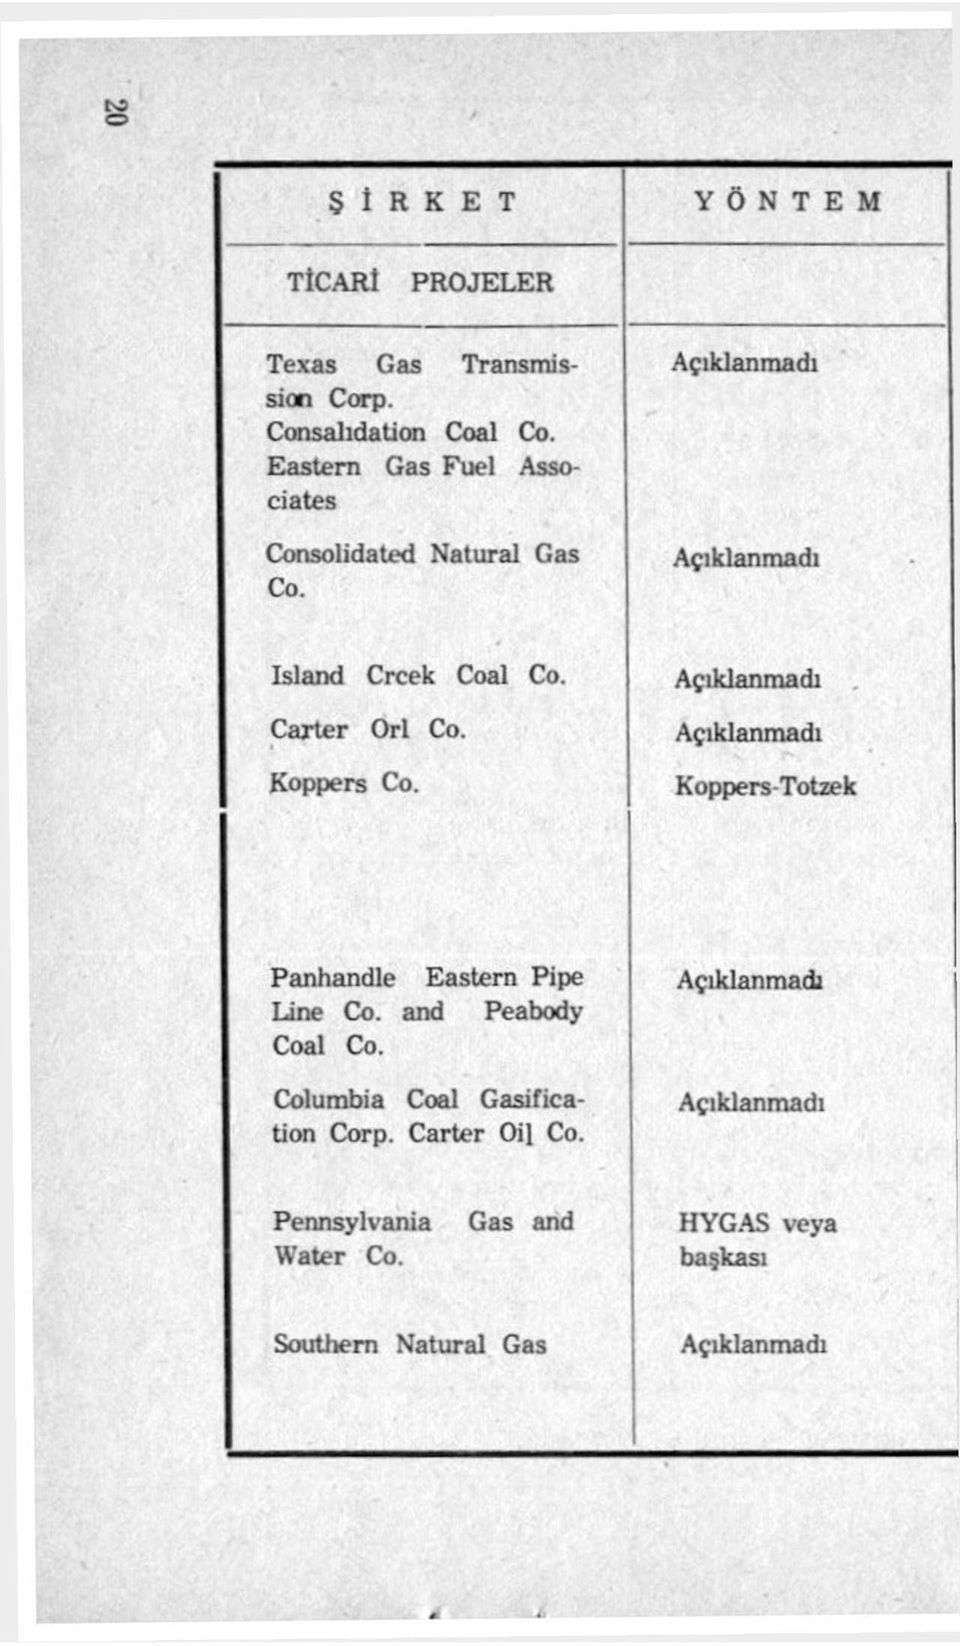 Açıklanmadı Carter Orl Co. Açıklanmadı Koppers Co. Koppers-Totzek Panhandle Eastem Pipe Line Co. and Peabody Coal Co.